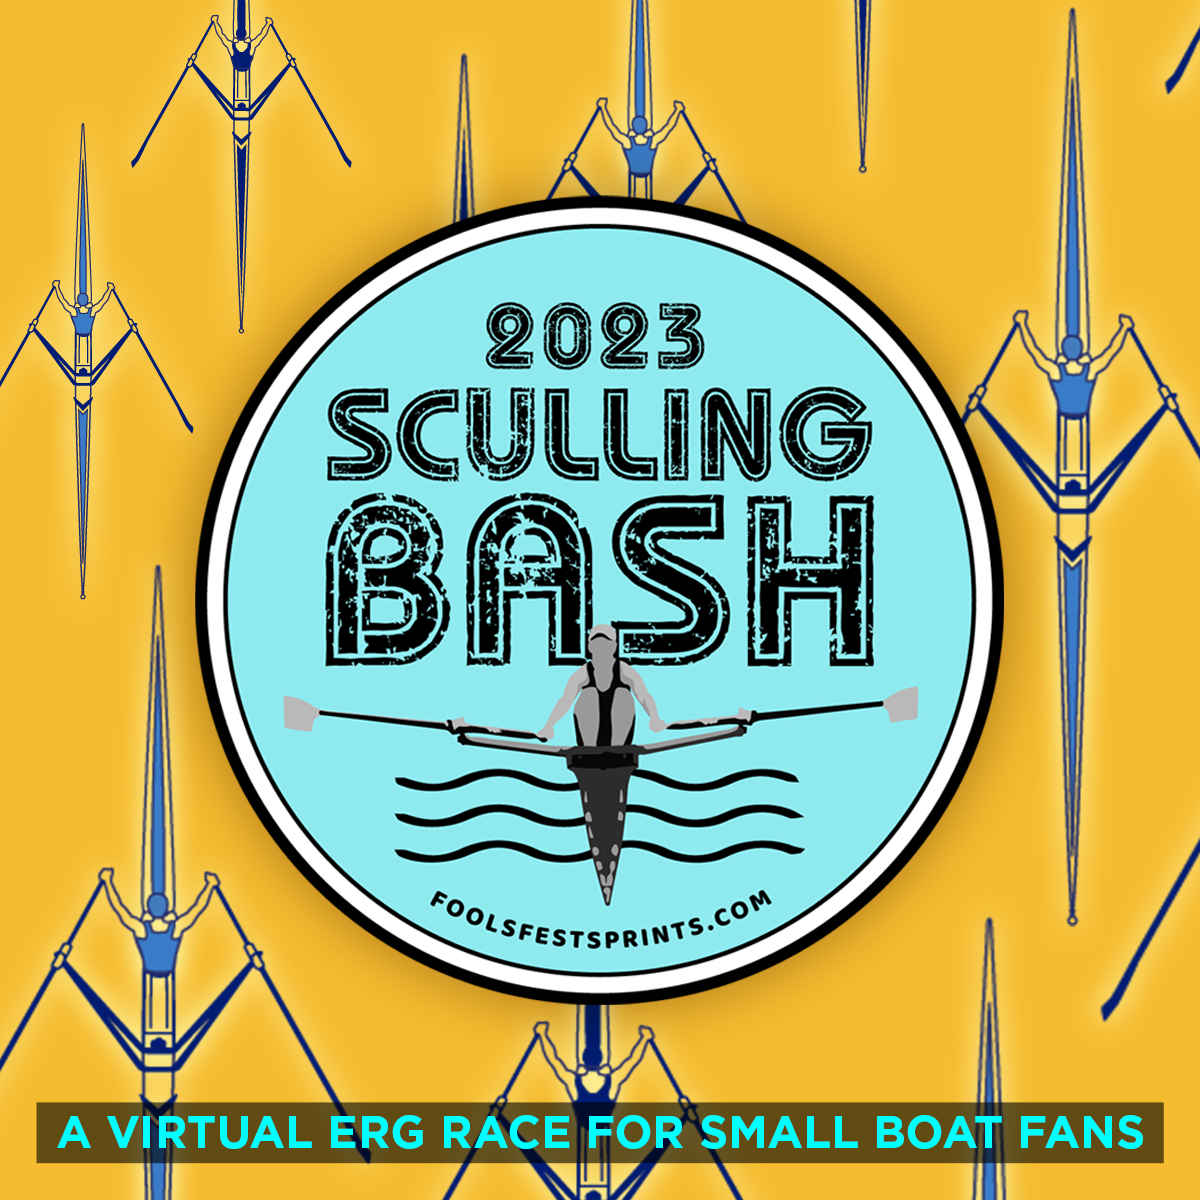 2023 Sculling Bash virtual erg races - foolsfestsprints.com